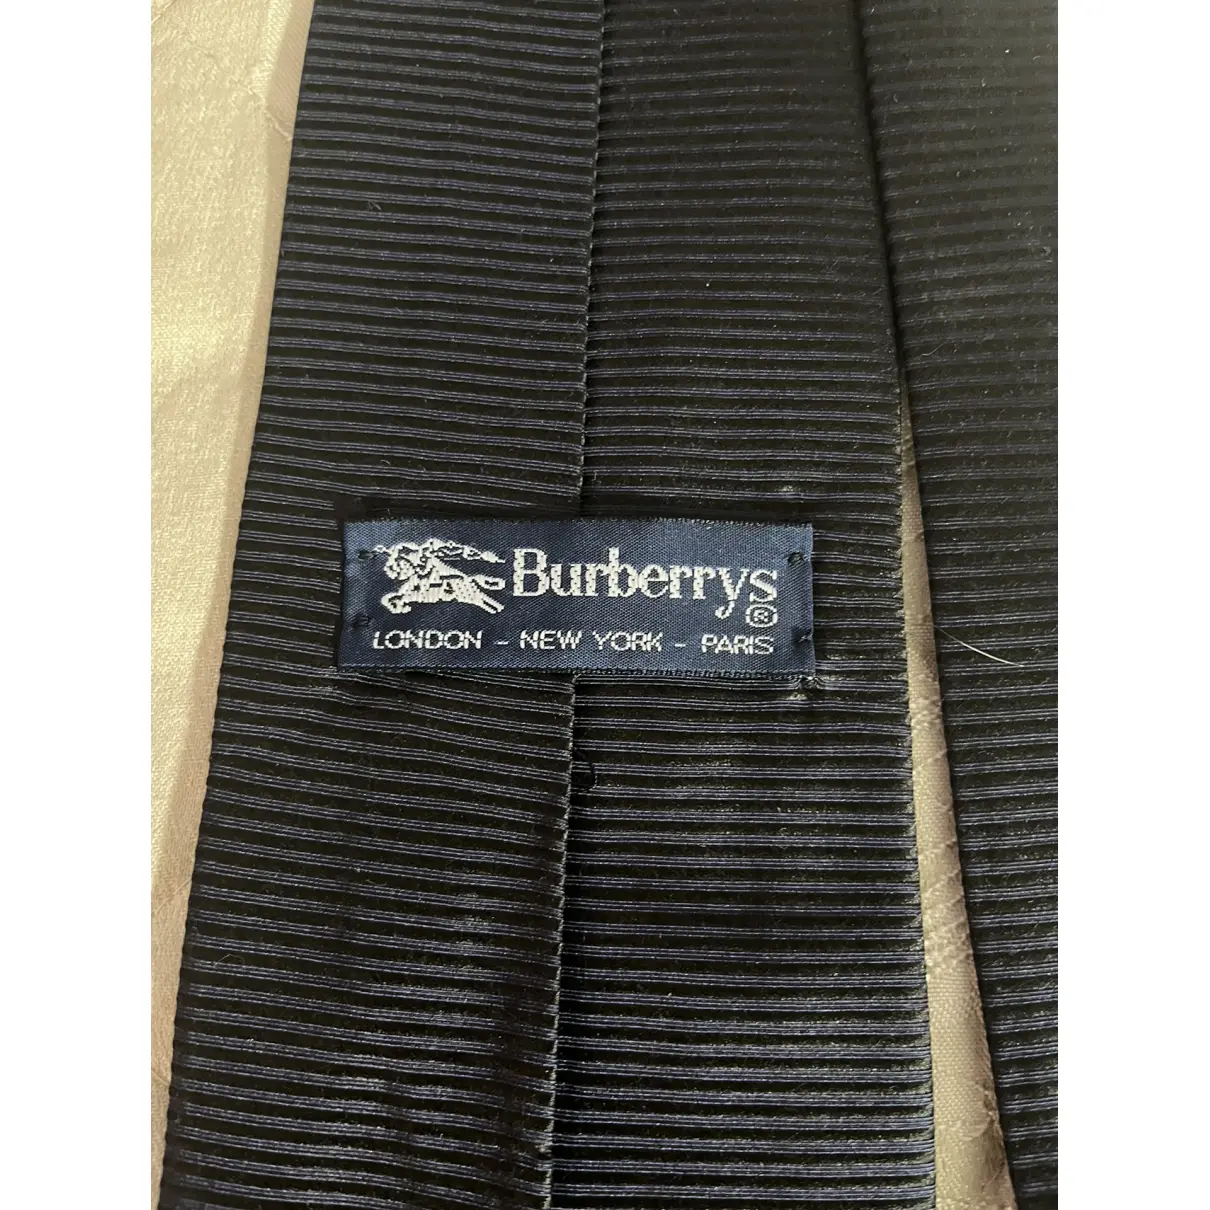 Buy Burberry Silk tie online - Vintage